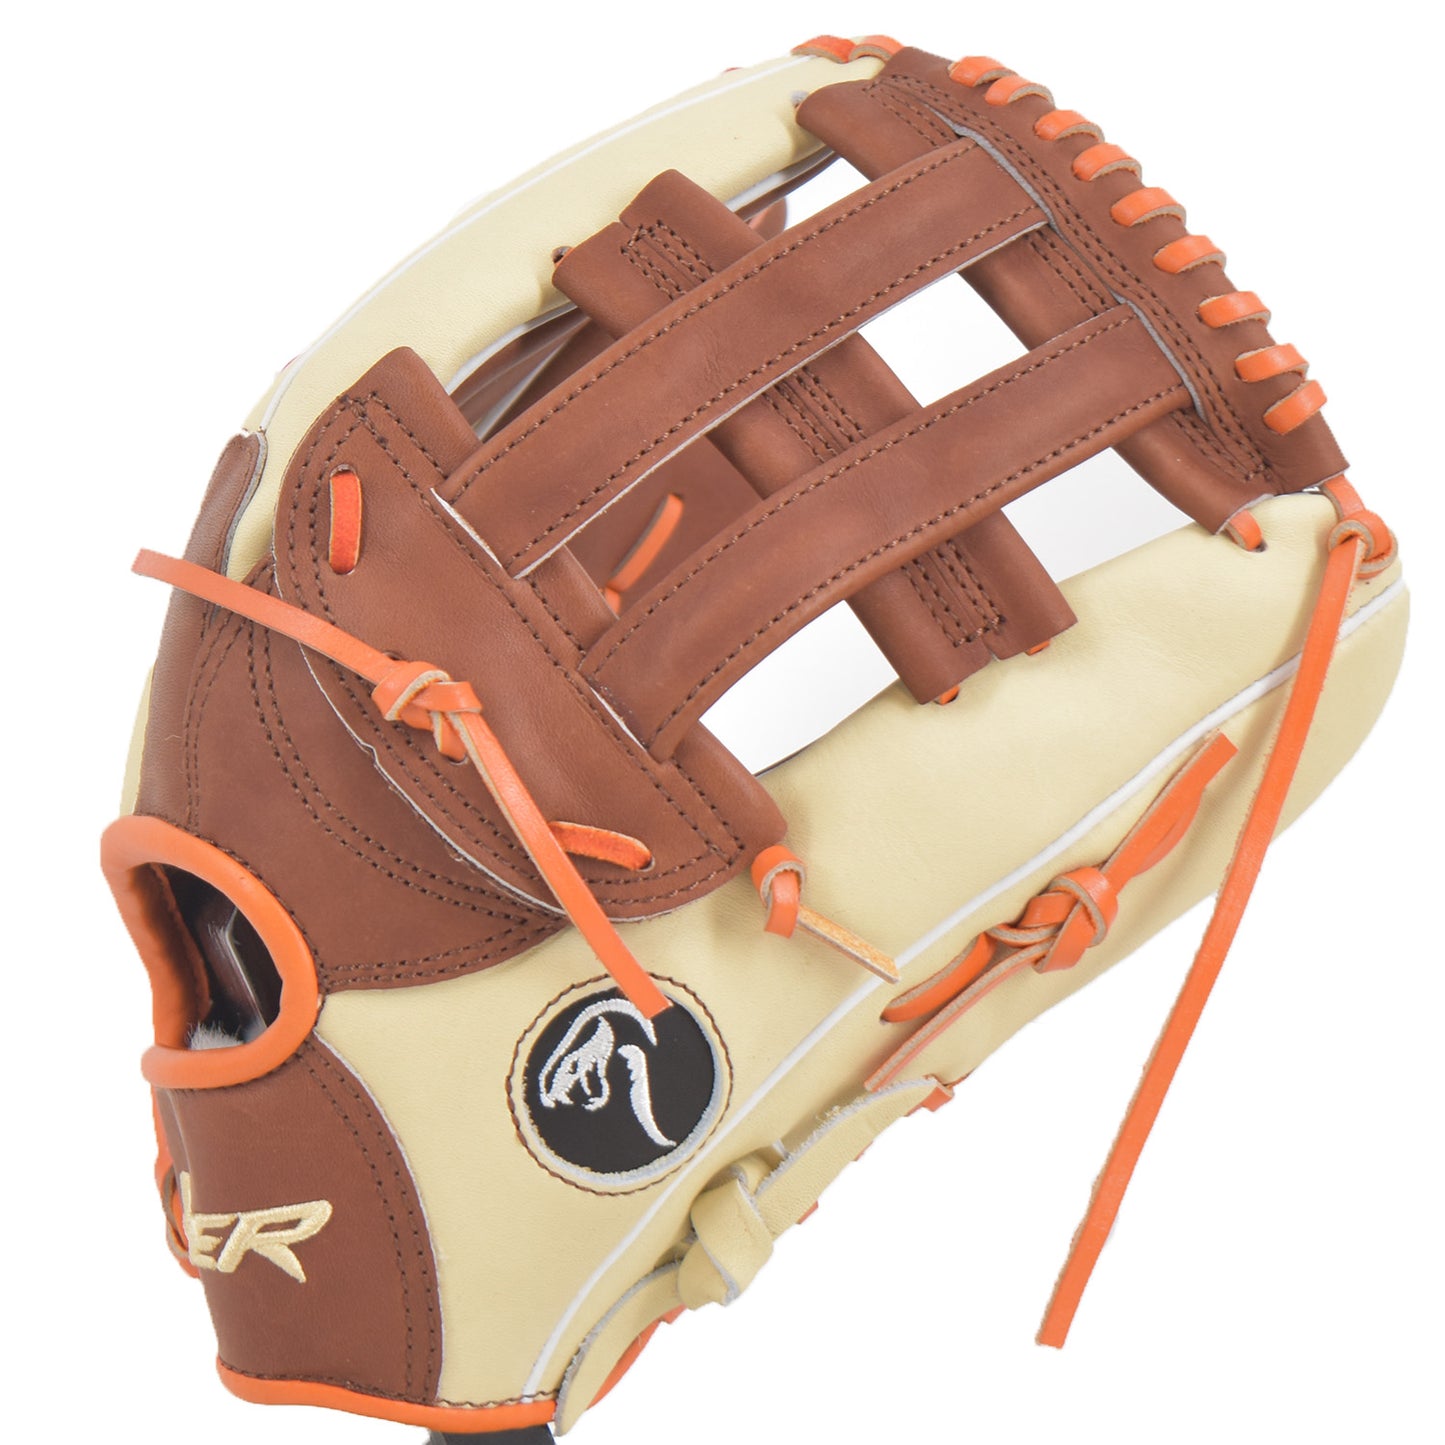 Viper Japanese Kip Leather Slowpitch Softball Fielding Glove  Carmel Tan Orange